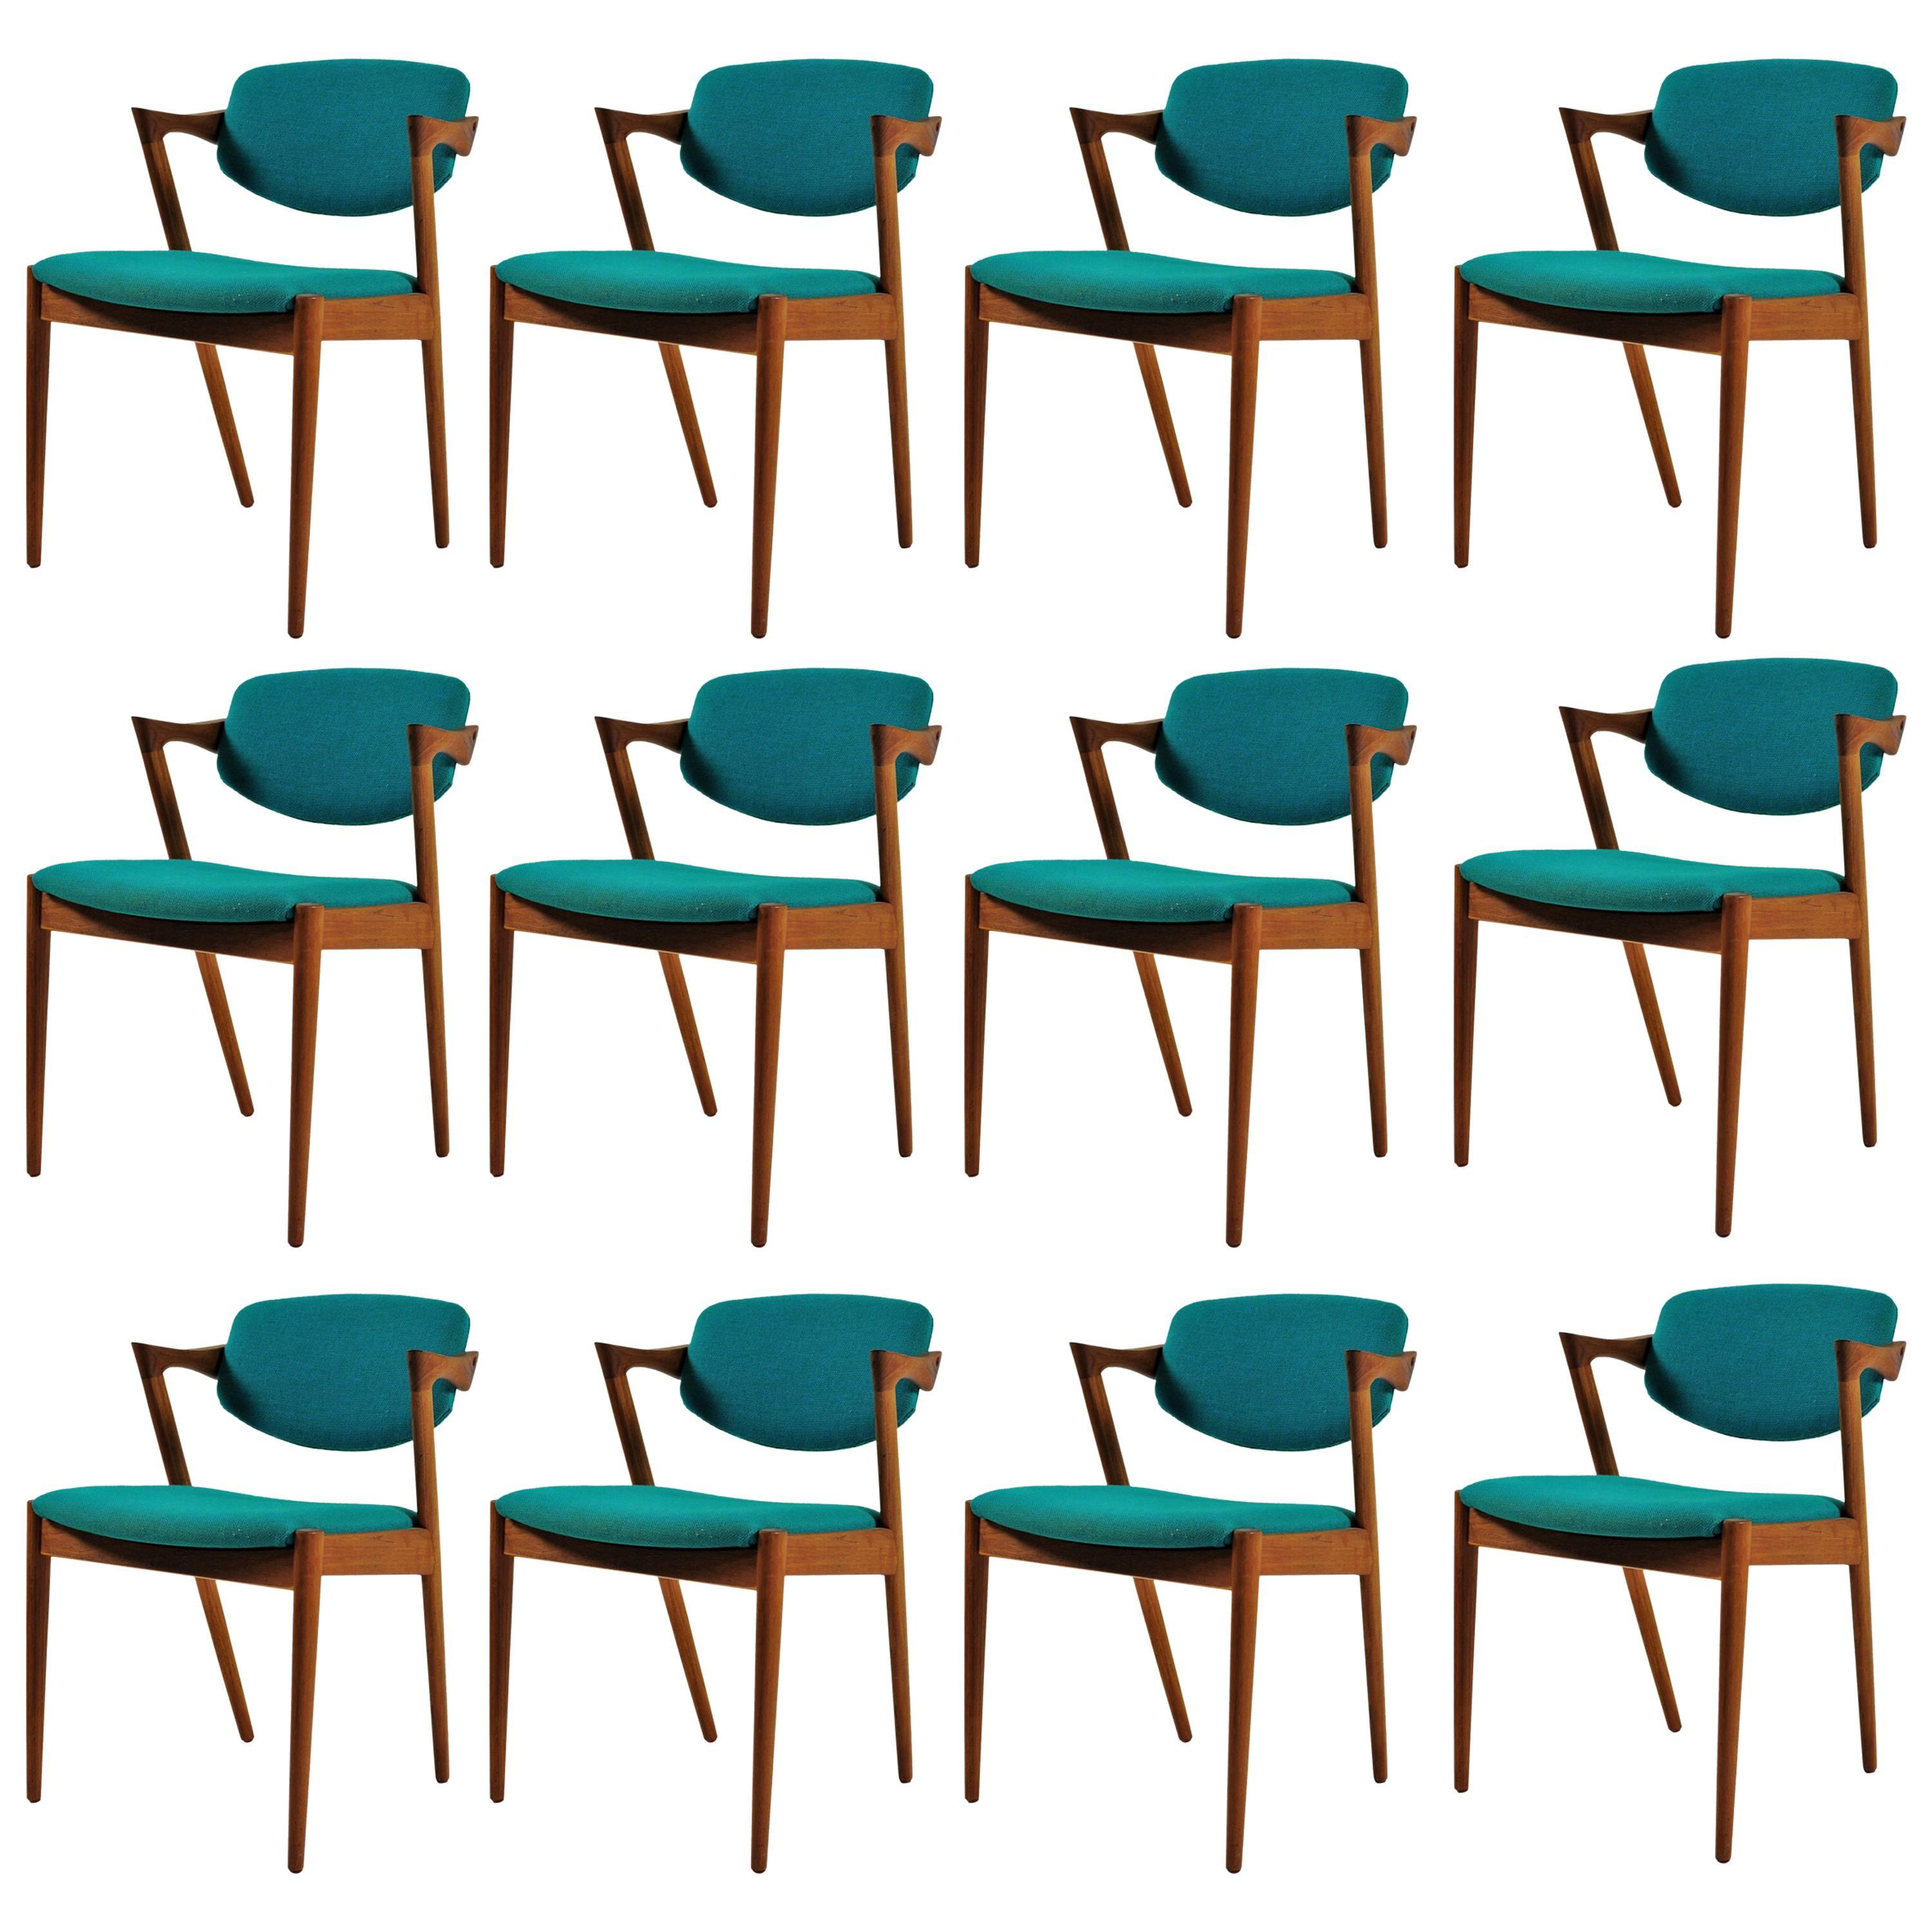 1960s Kai Kristiansen Set of 12 Model 42 Dining Chairs in Teak